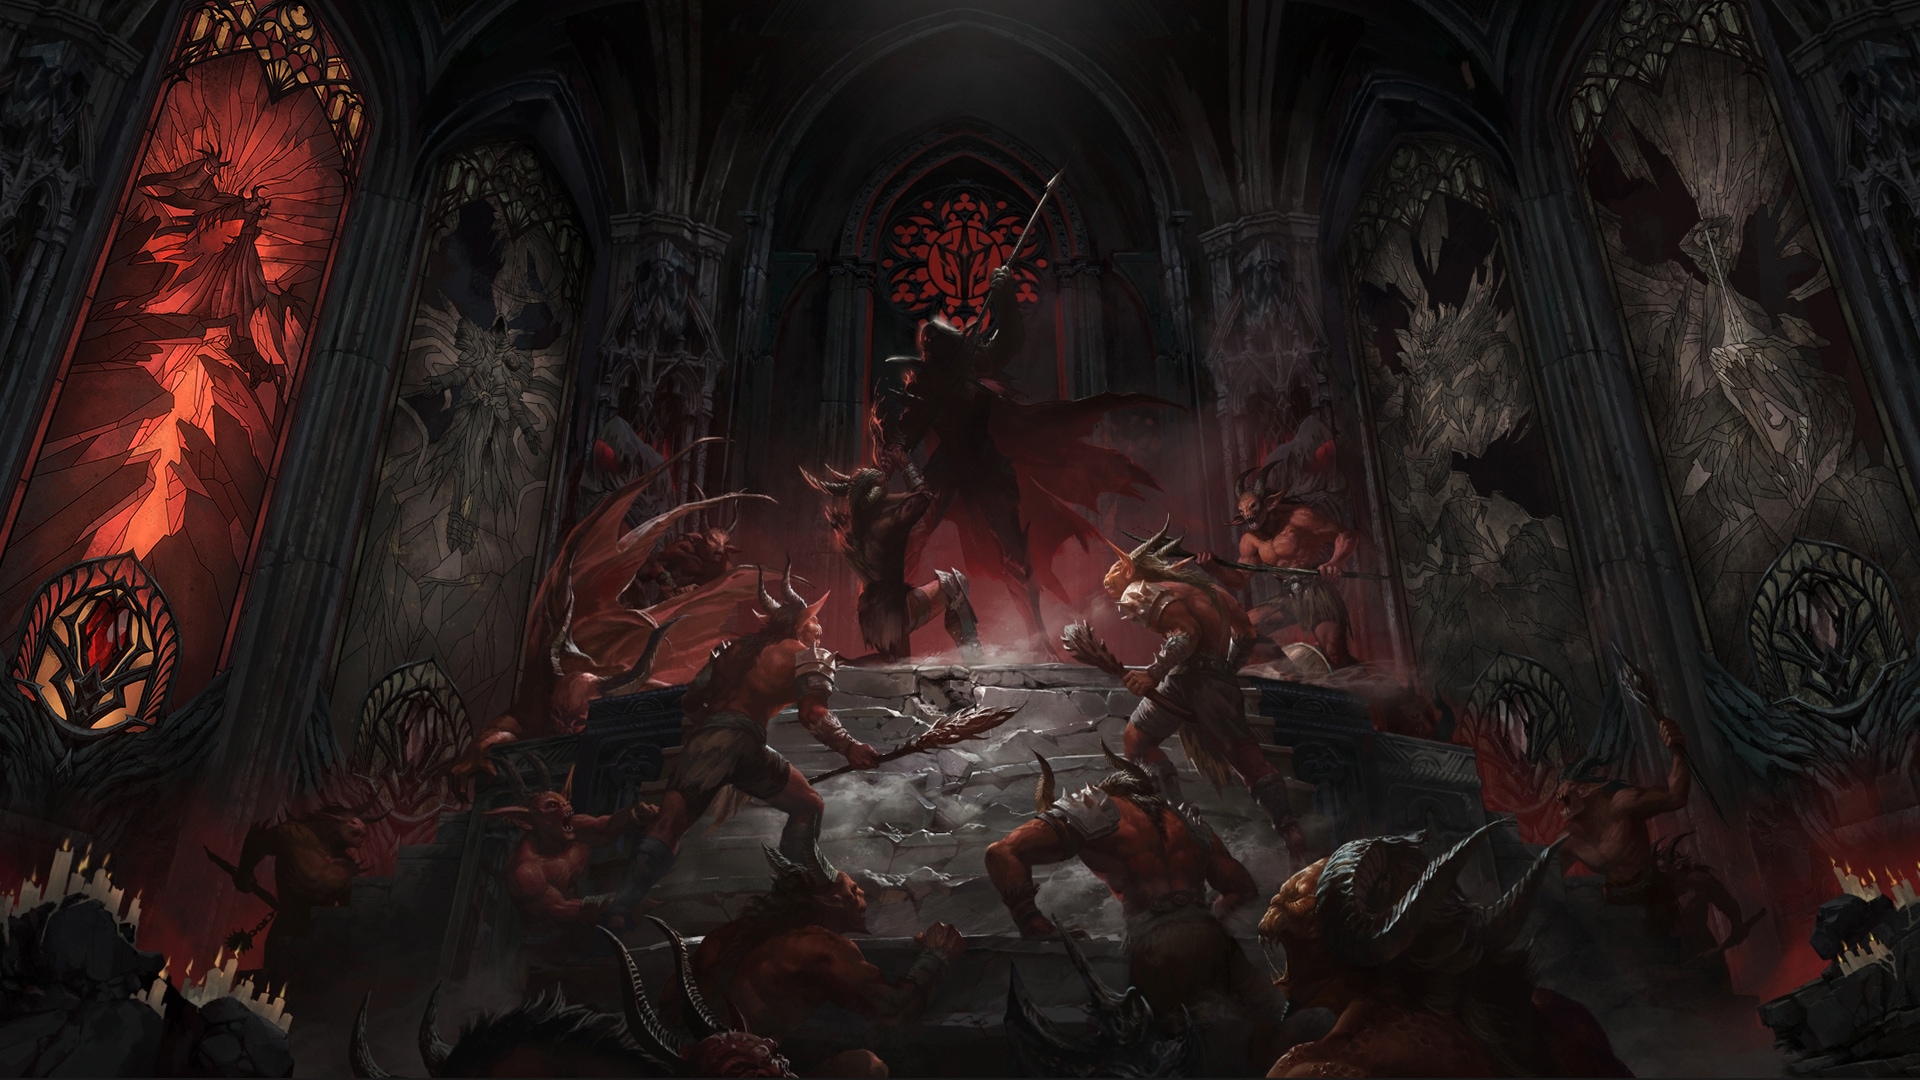 Diablo Immortal PH  **Season 19 - Best Builds for Blood Knight